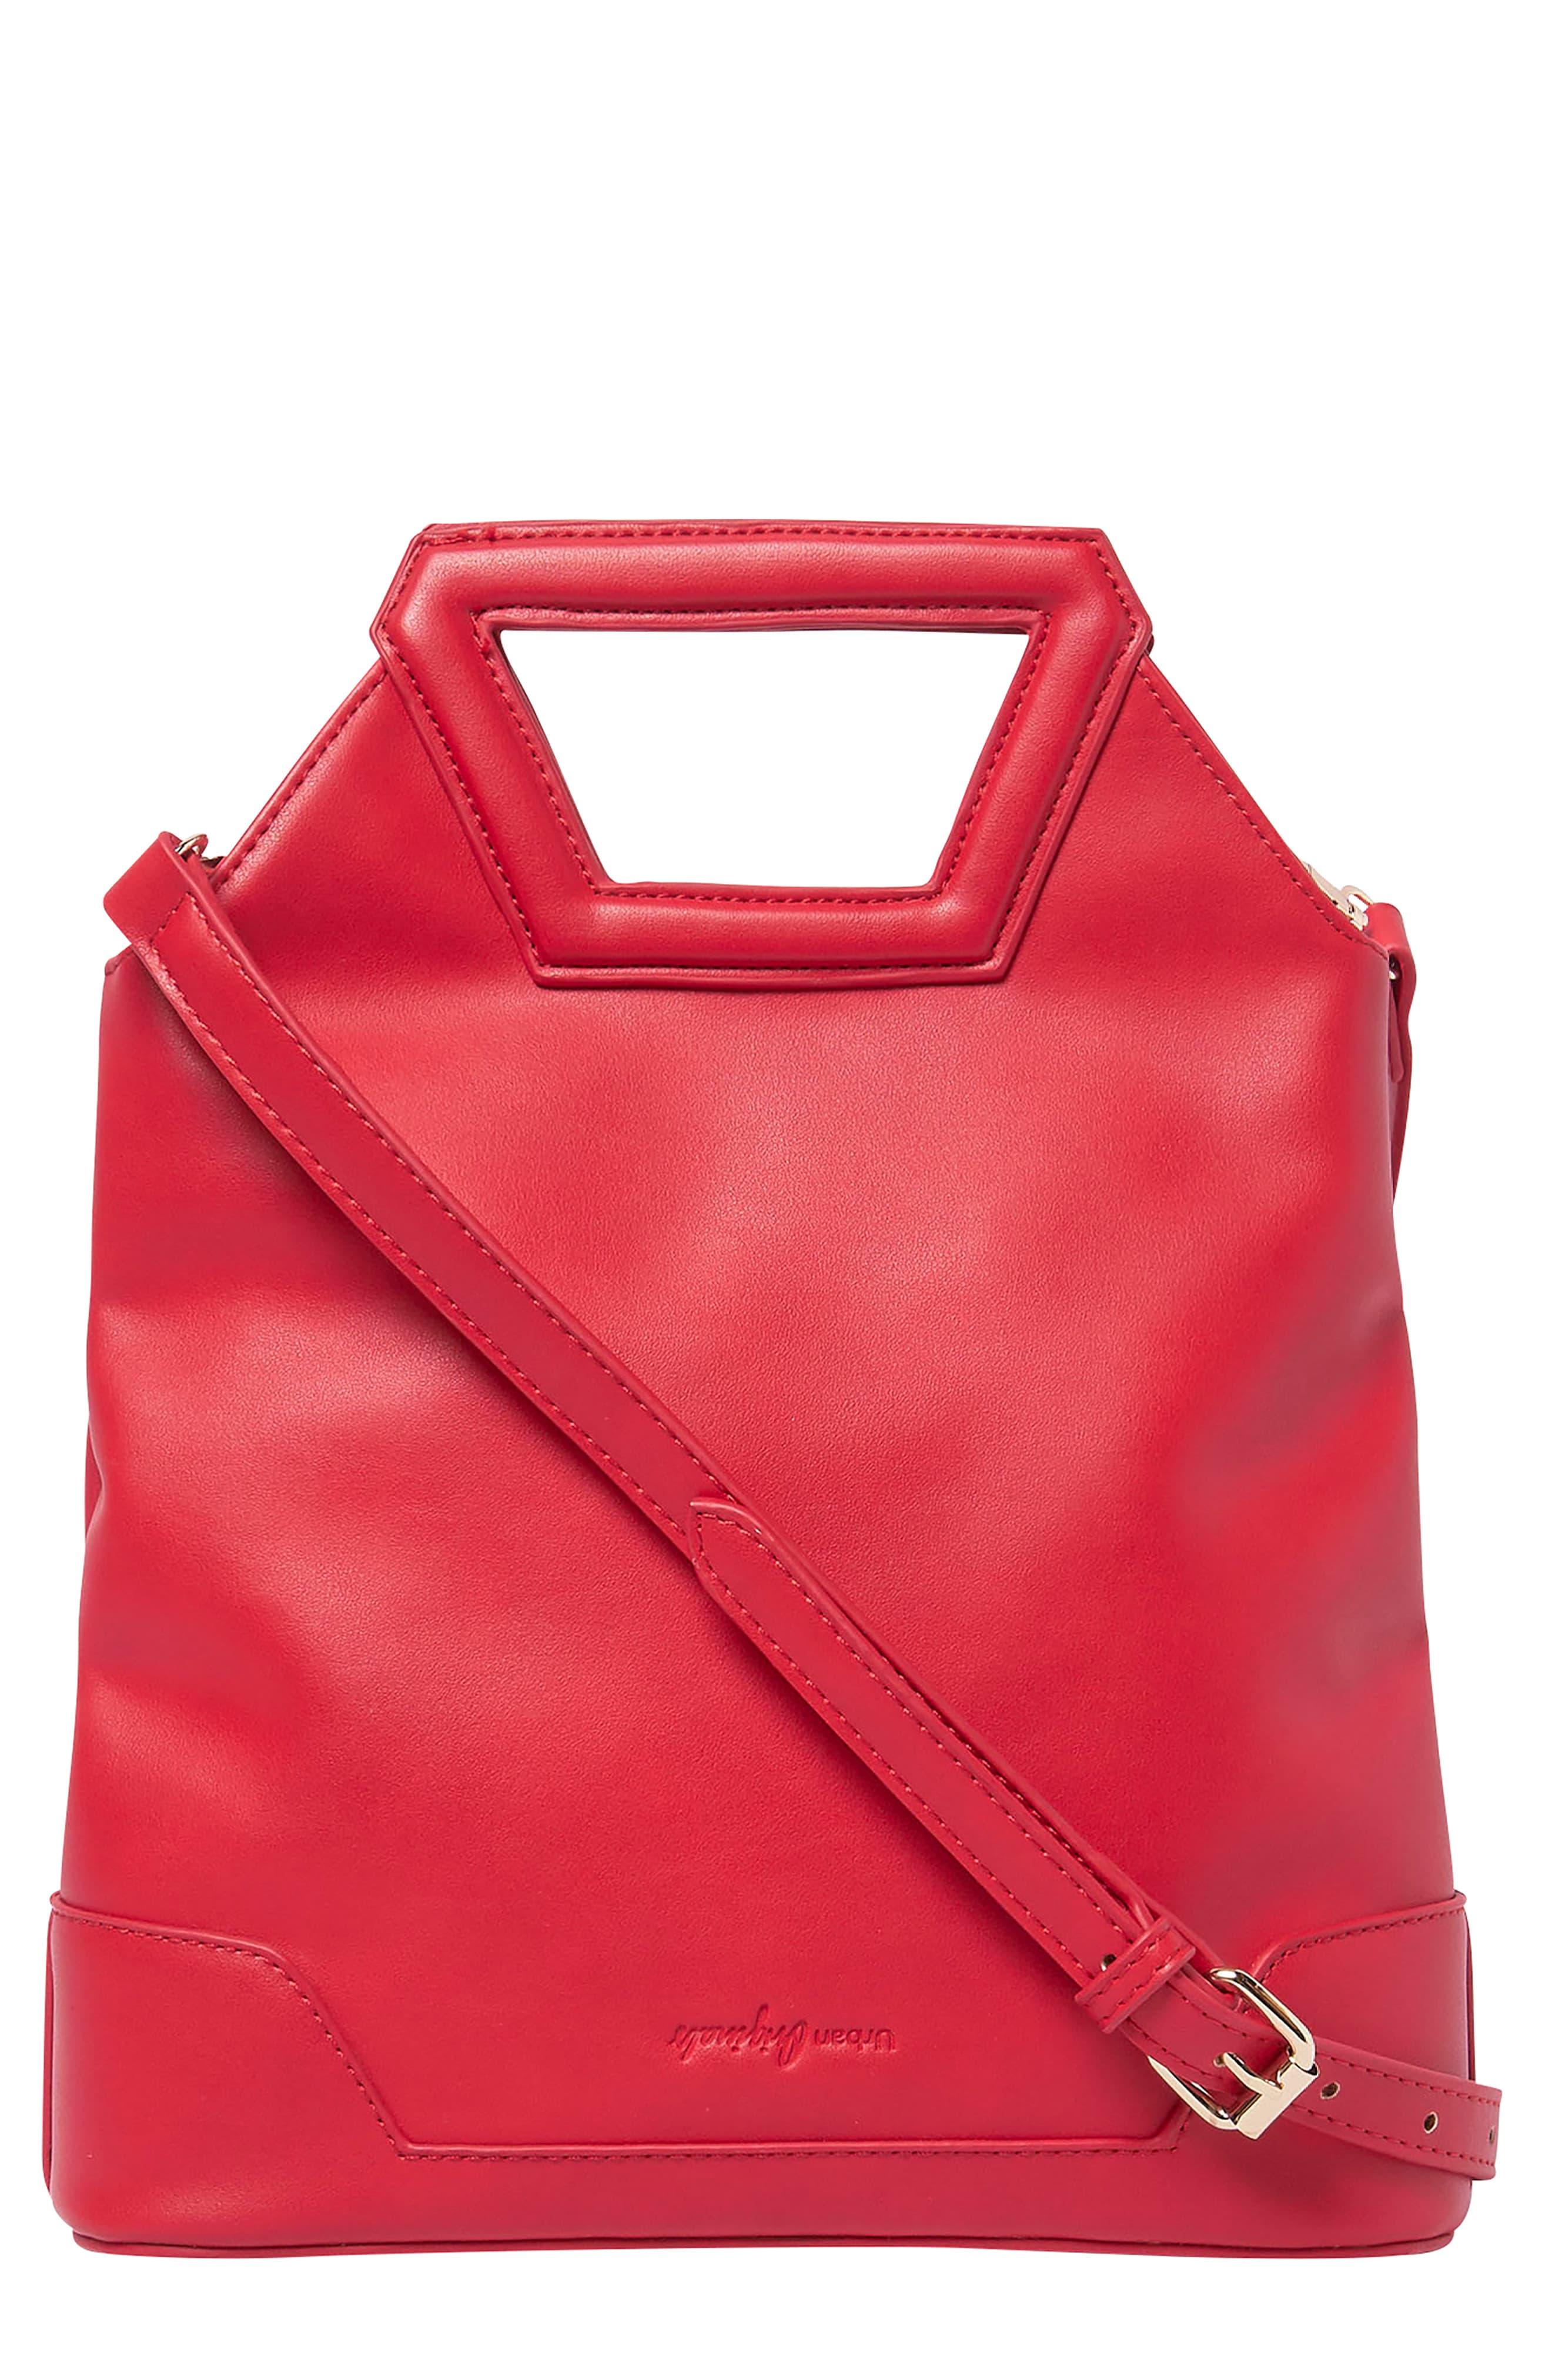 Urban Originals Vegan Leather Crossbody Bag in Red - Lyst